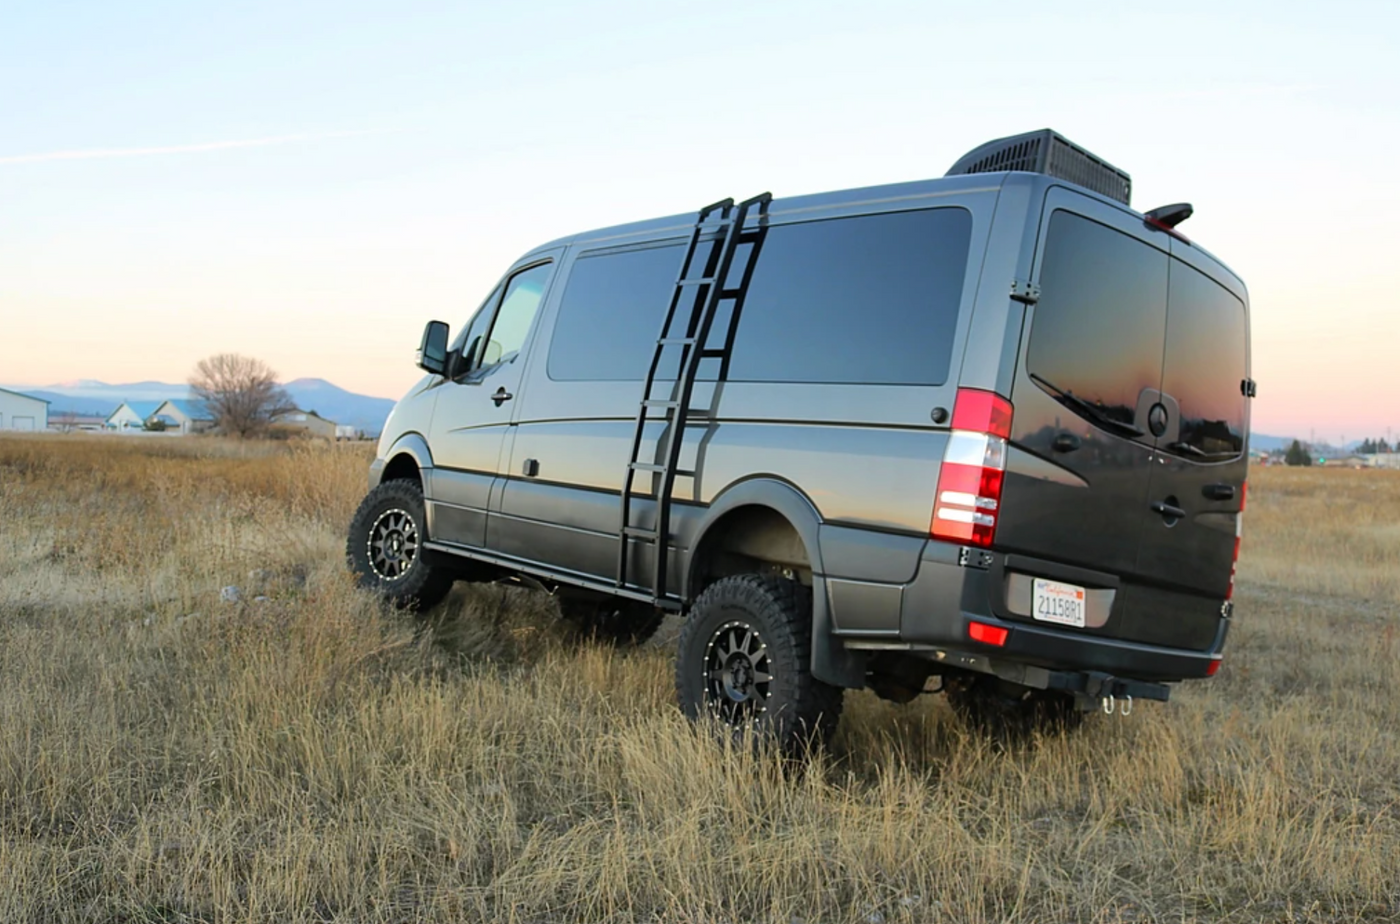 Rhino the Adventure Van: Our 2019 Sprinter 2500 4X4